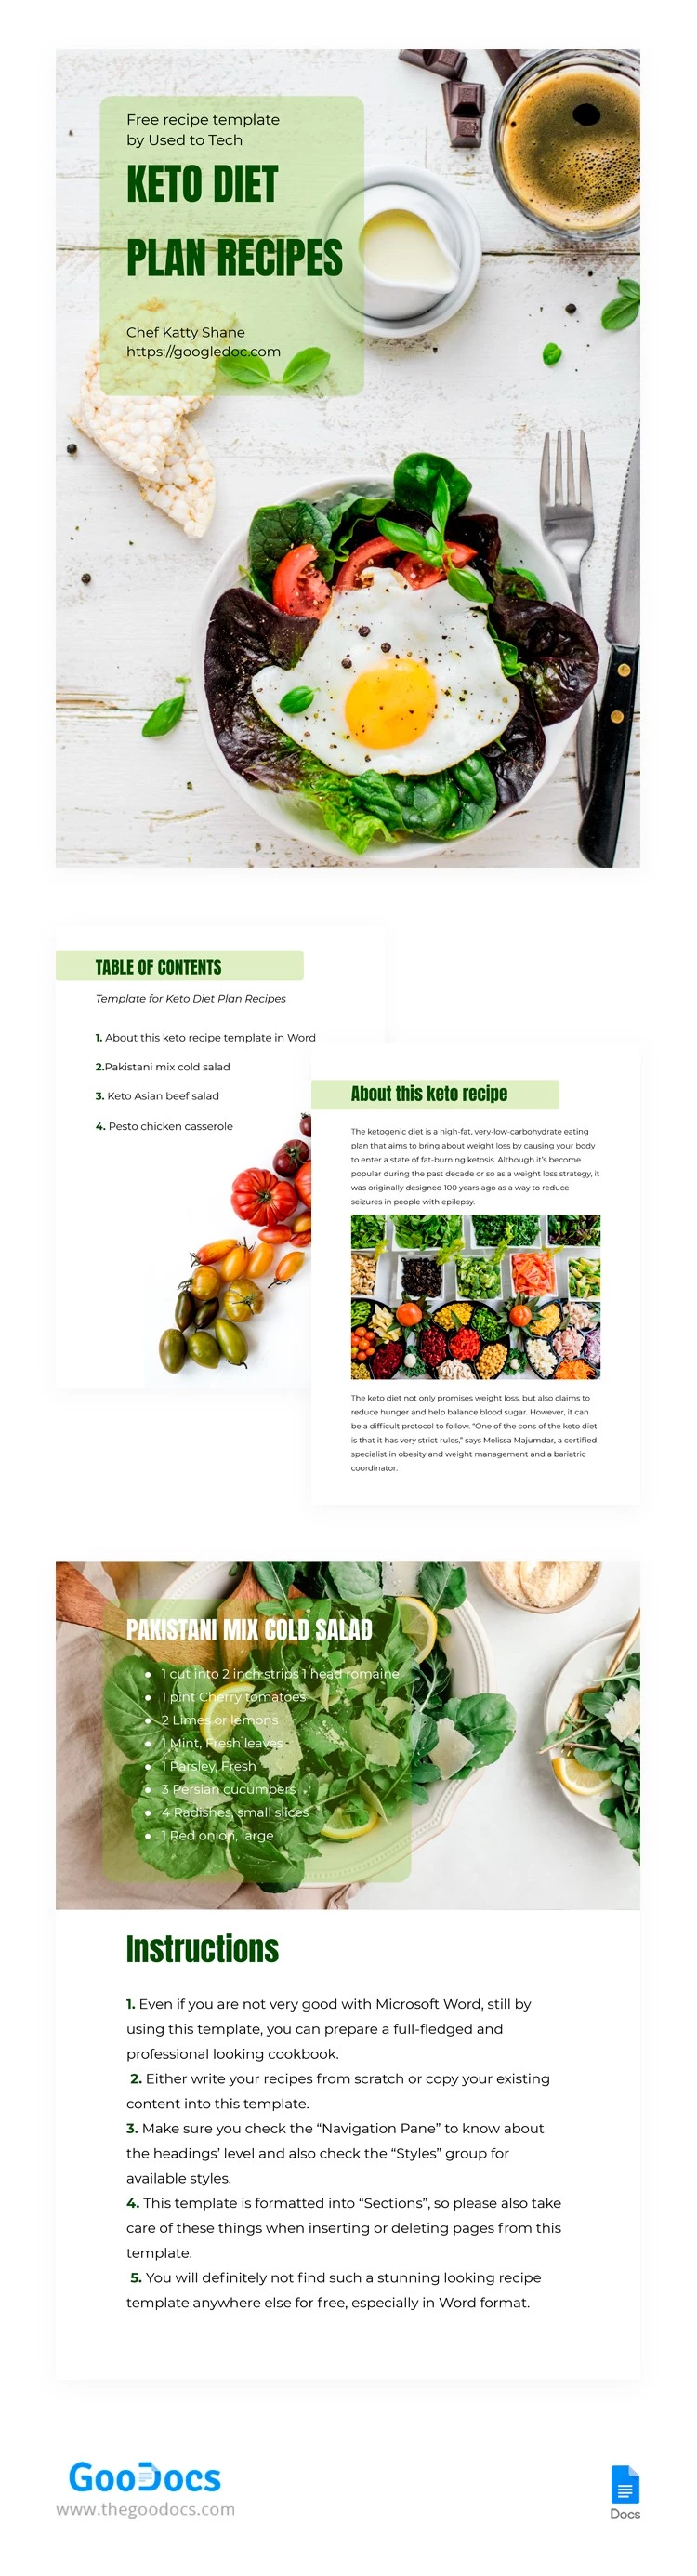 Keto Diet Book - free Google Docs Template - 10062149